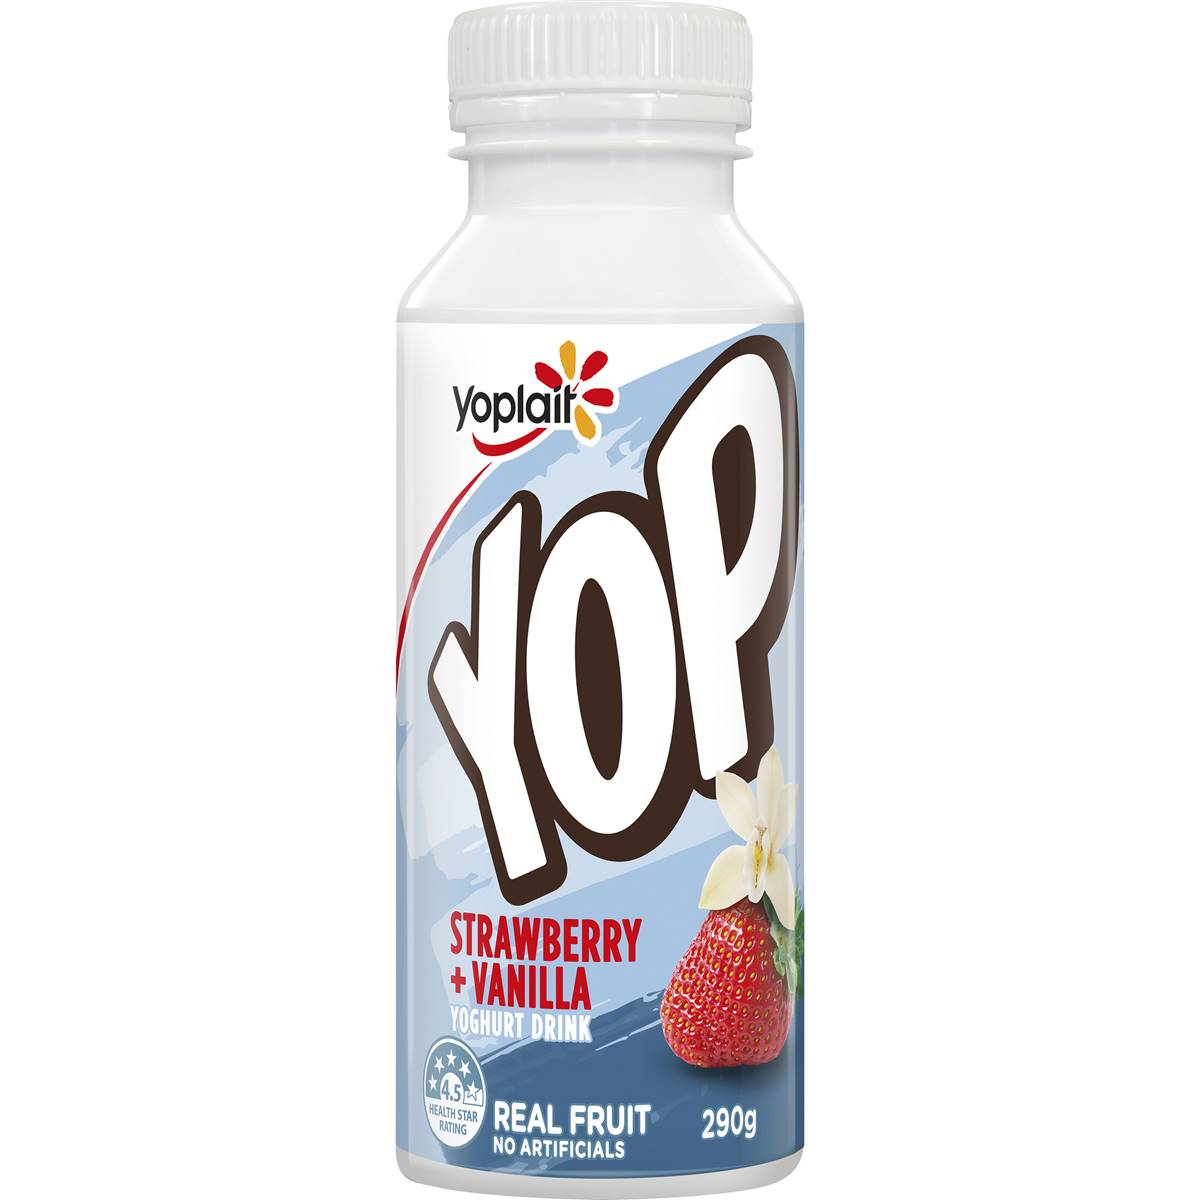 Calories in Yoplait Yop Strawberry & Vanilla Yoghurt Drink